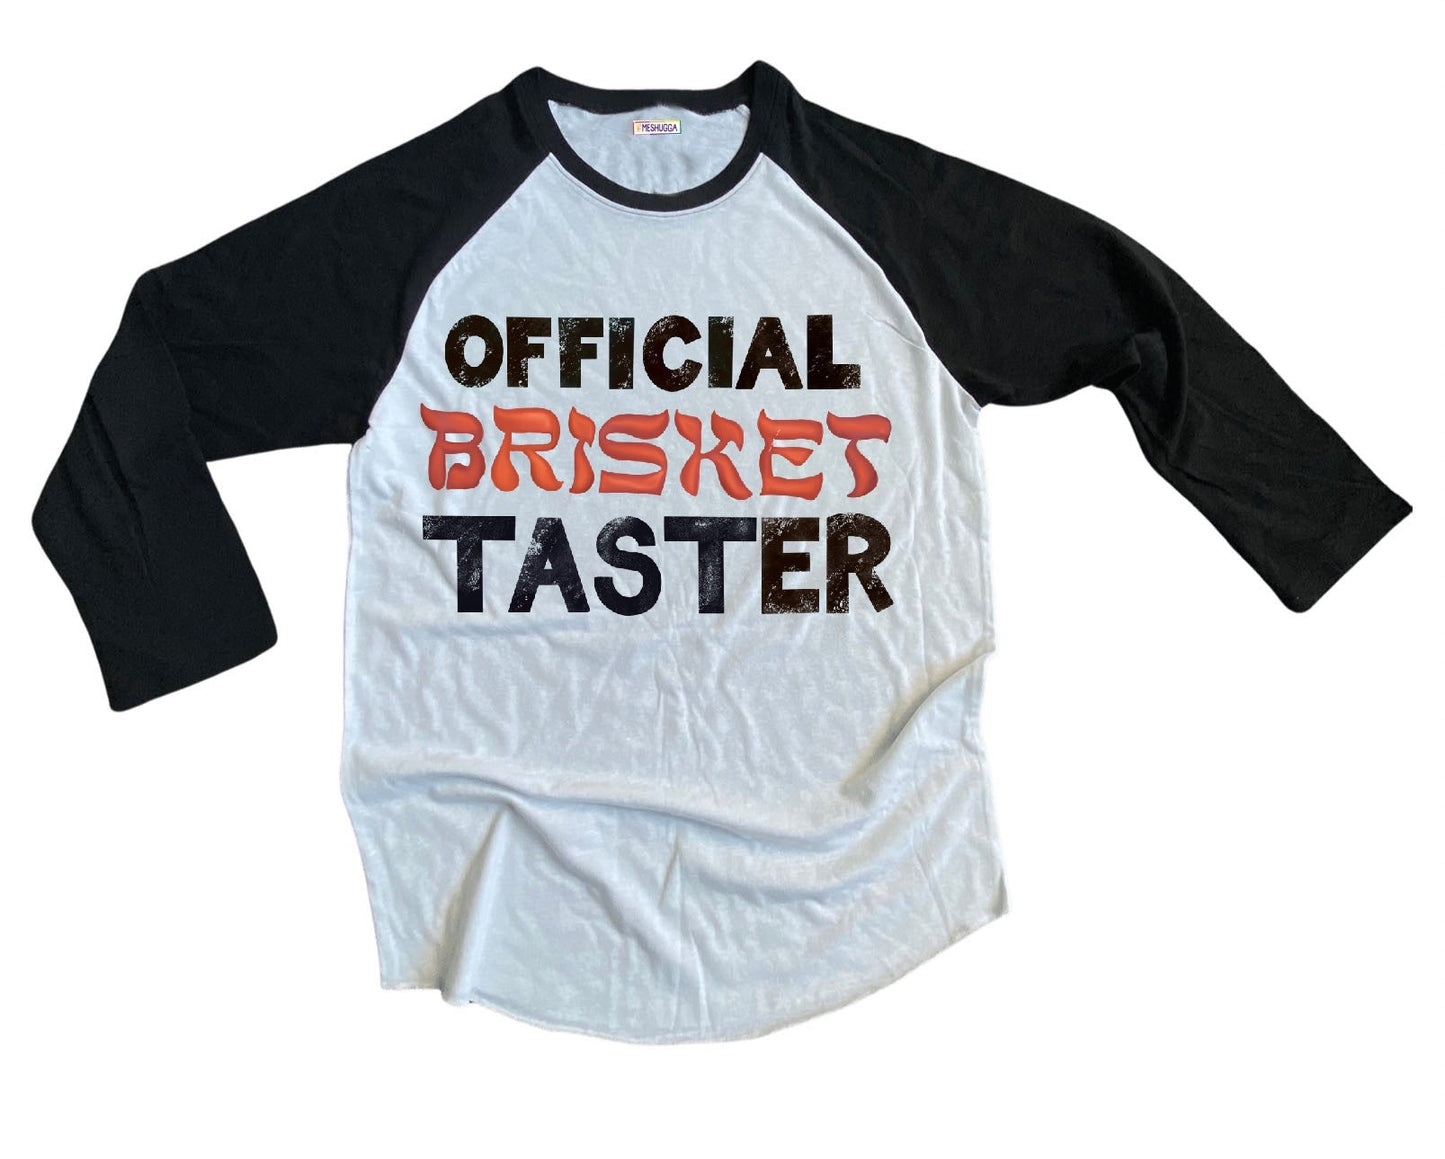 Official Brisket Taster Baseball Shirt - Adult